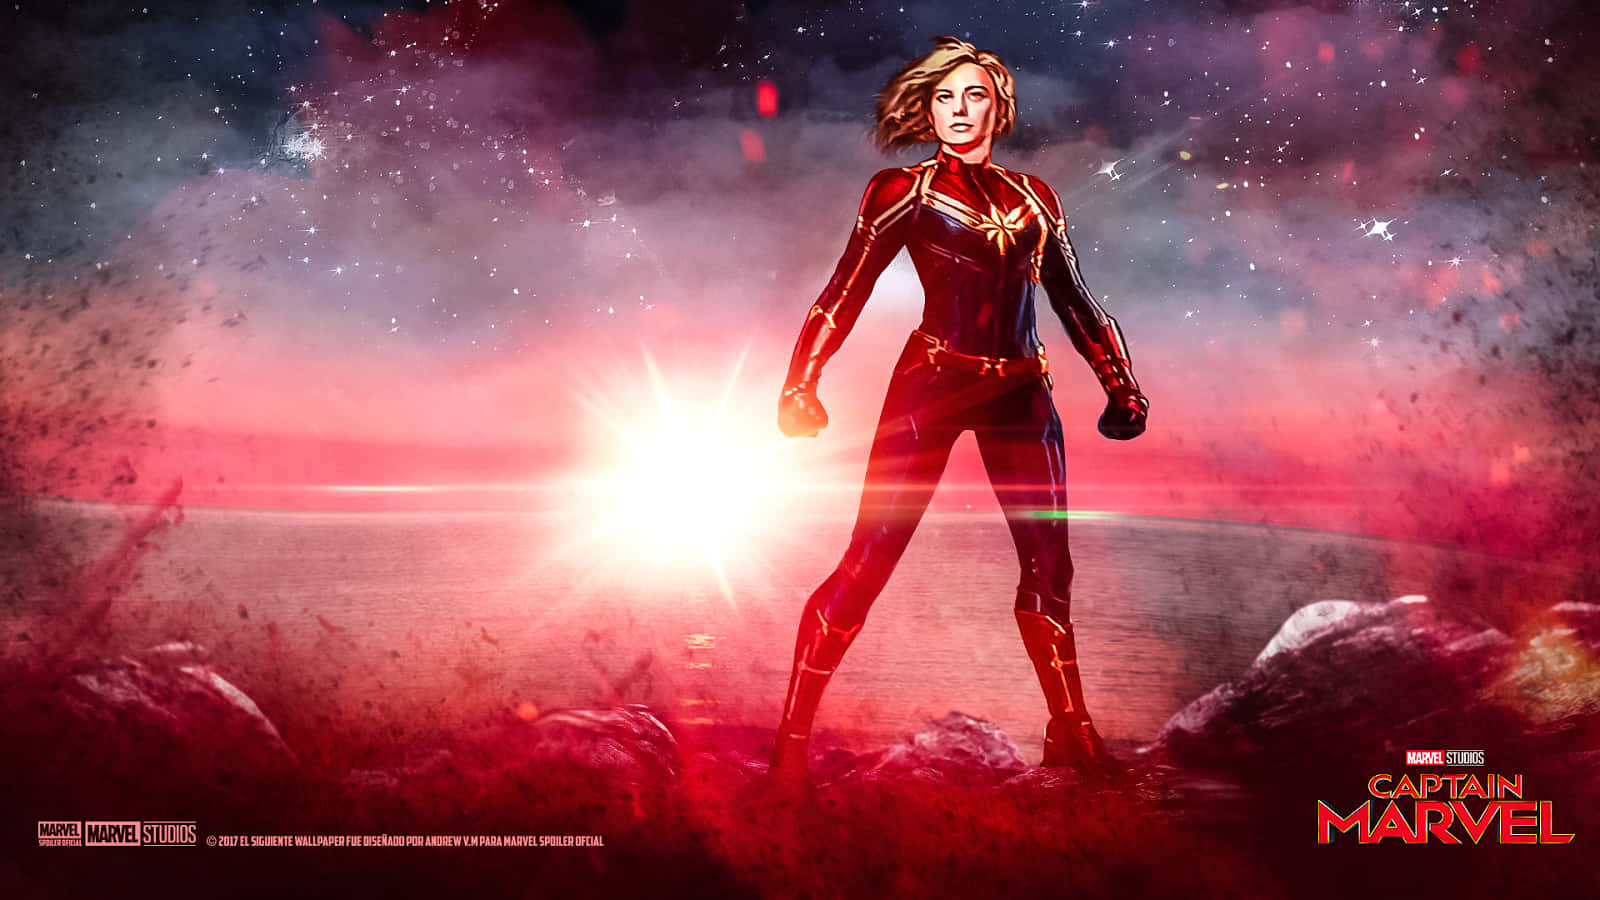 Bereitfür Action: Brie Larson Als Captain Marvel Im Marvel Cinematic Universe